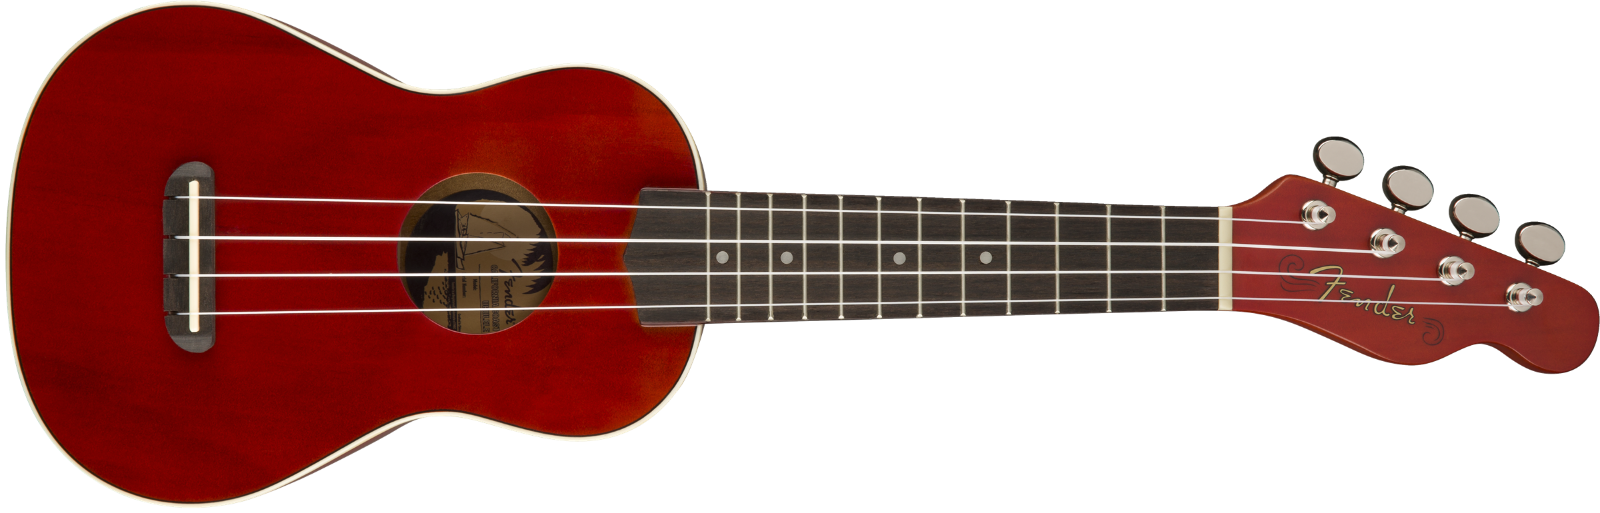 097-1610-590 Fender CA Venice Beach Inspired Soprano Ukulele Cherry Uke 2